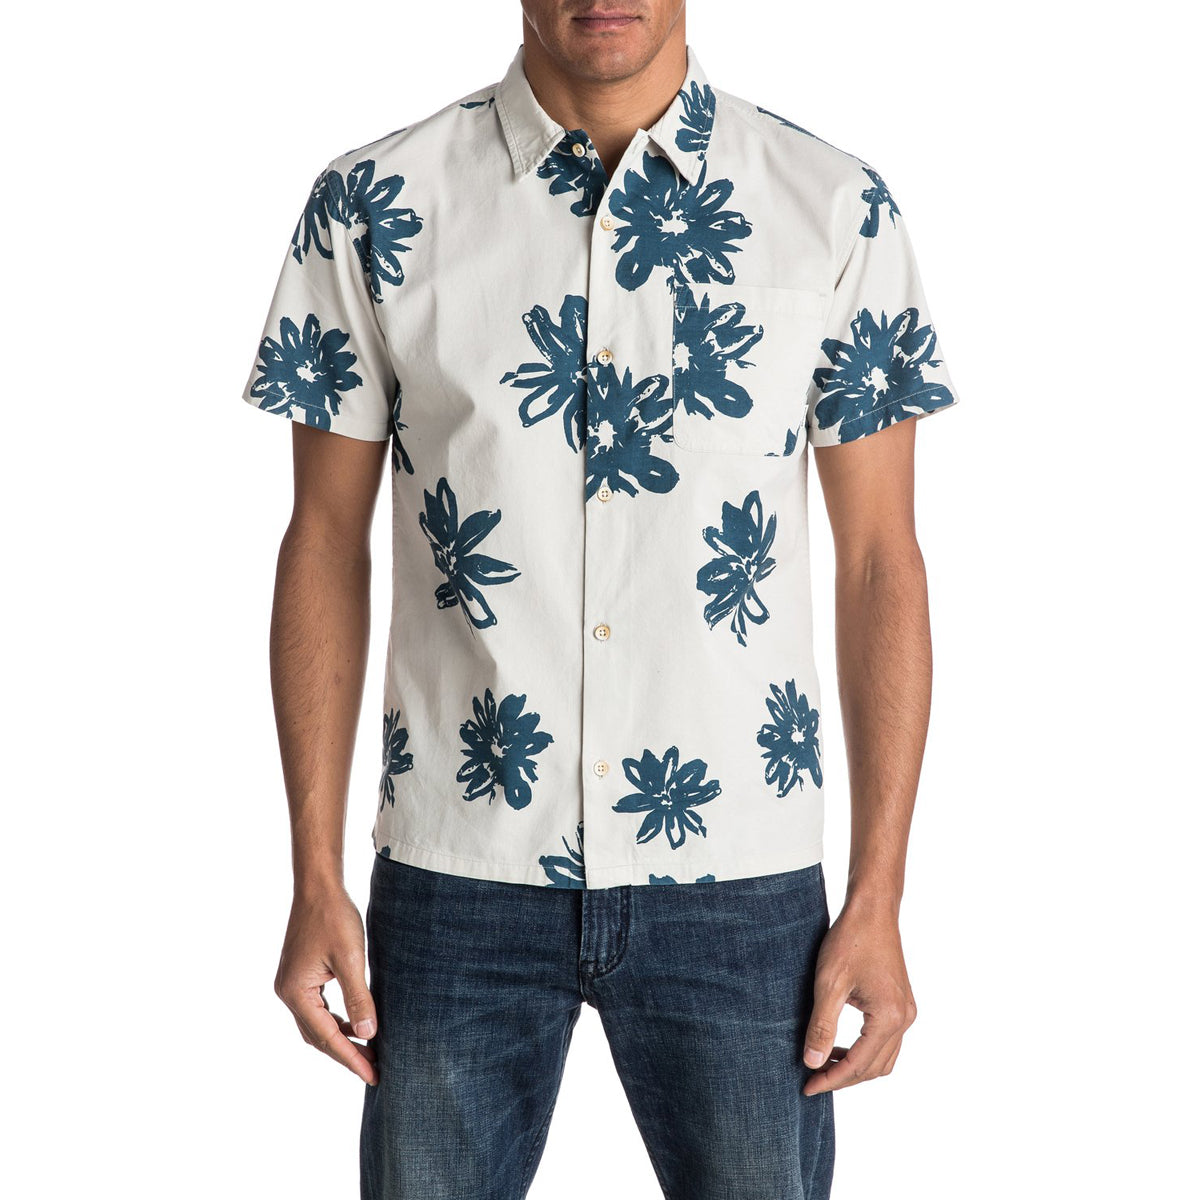 Quiksilver South Beach Dimes Men's Button Up Short-Sleeve Shirts - Birch Vintage Surf